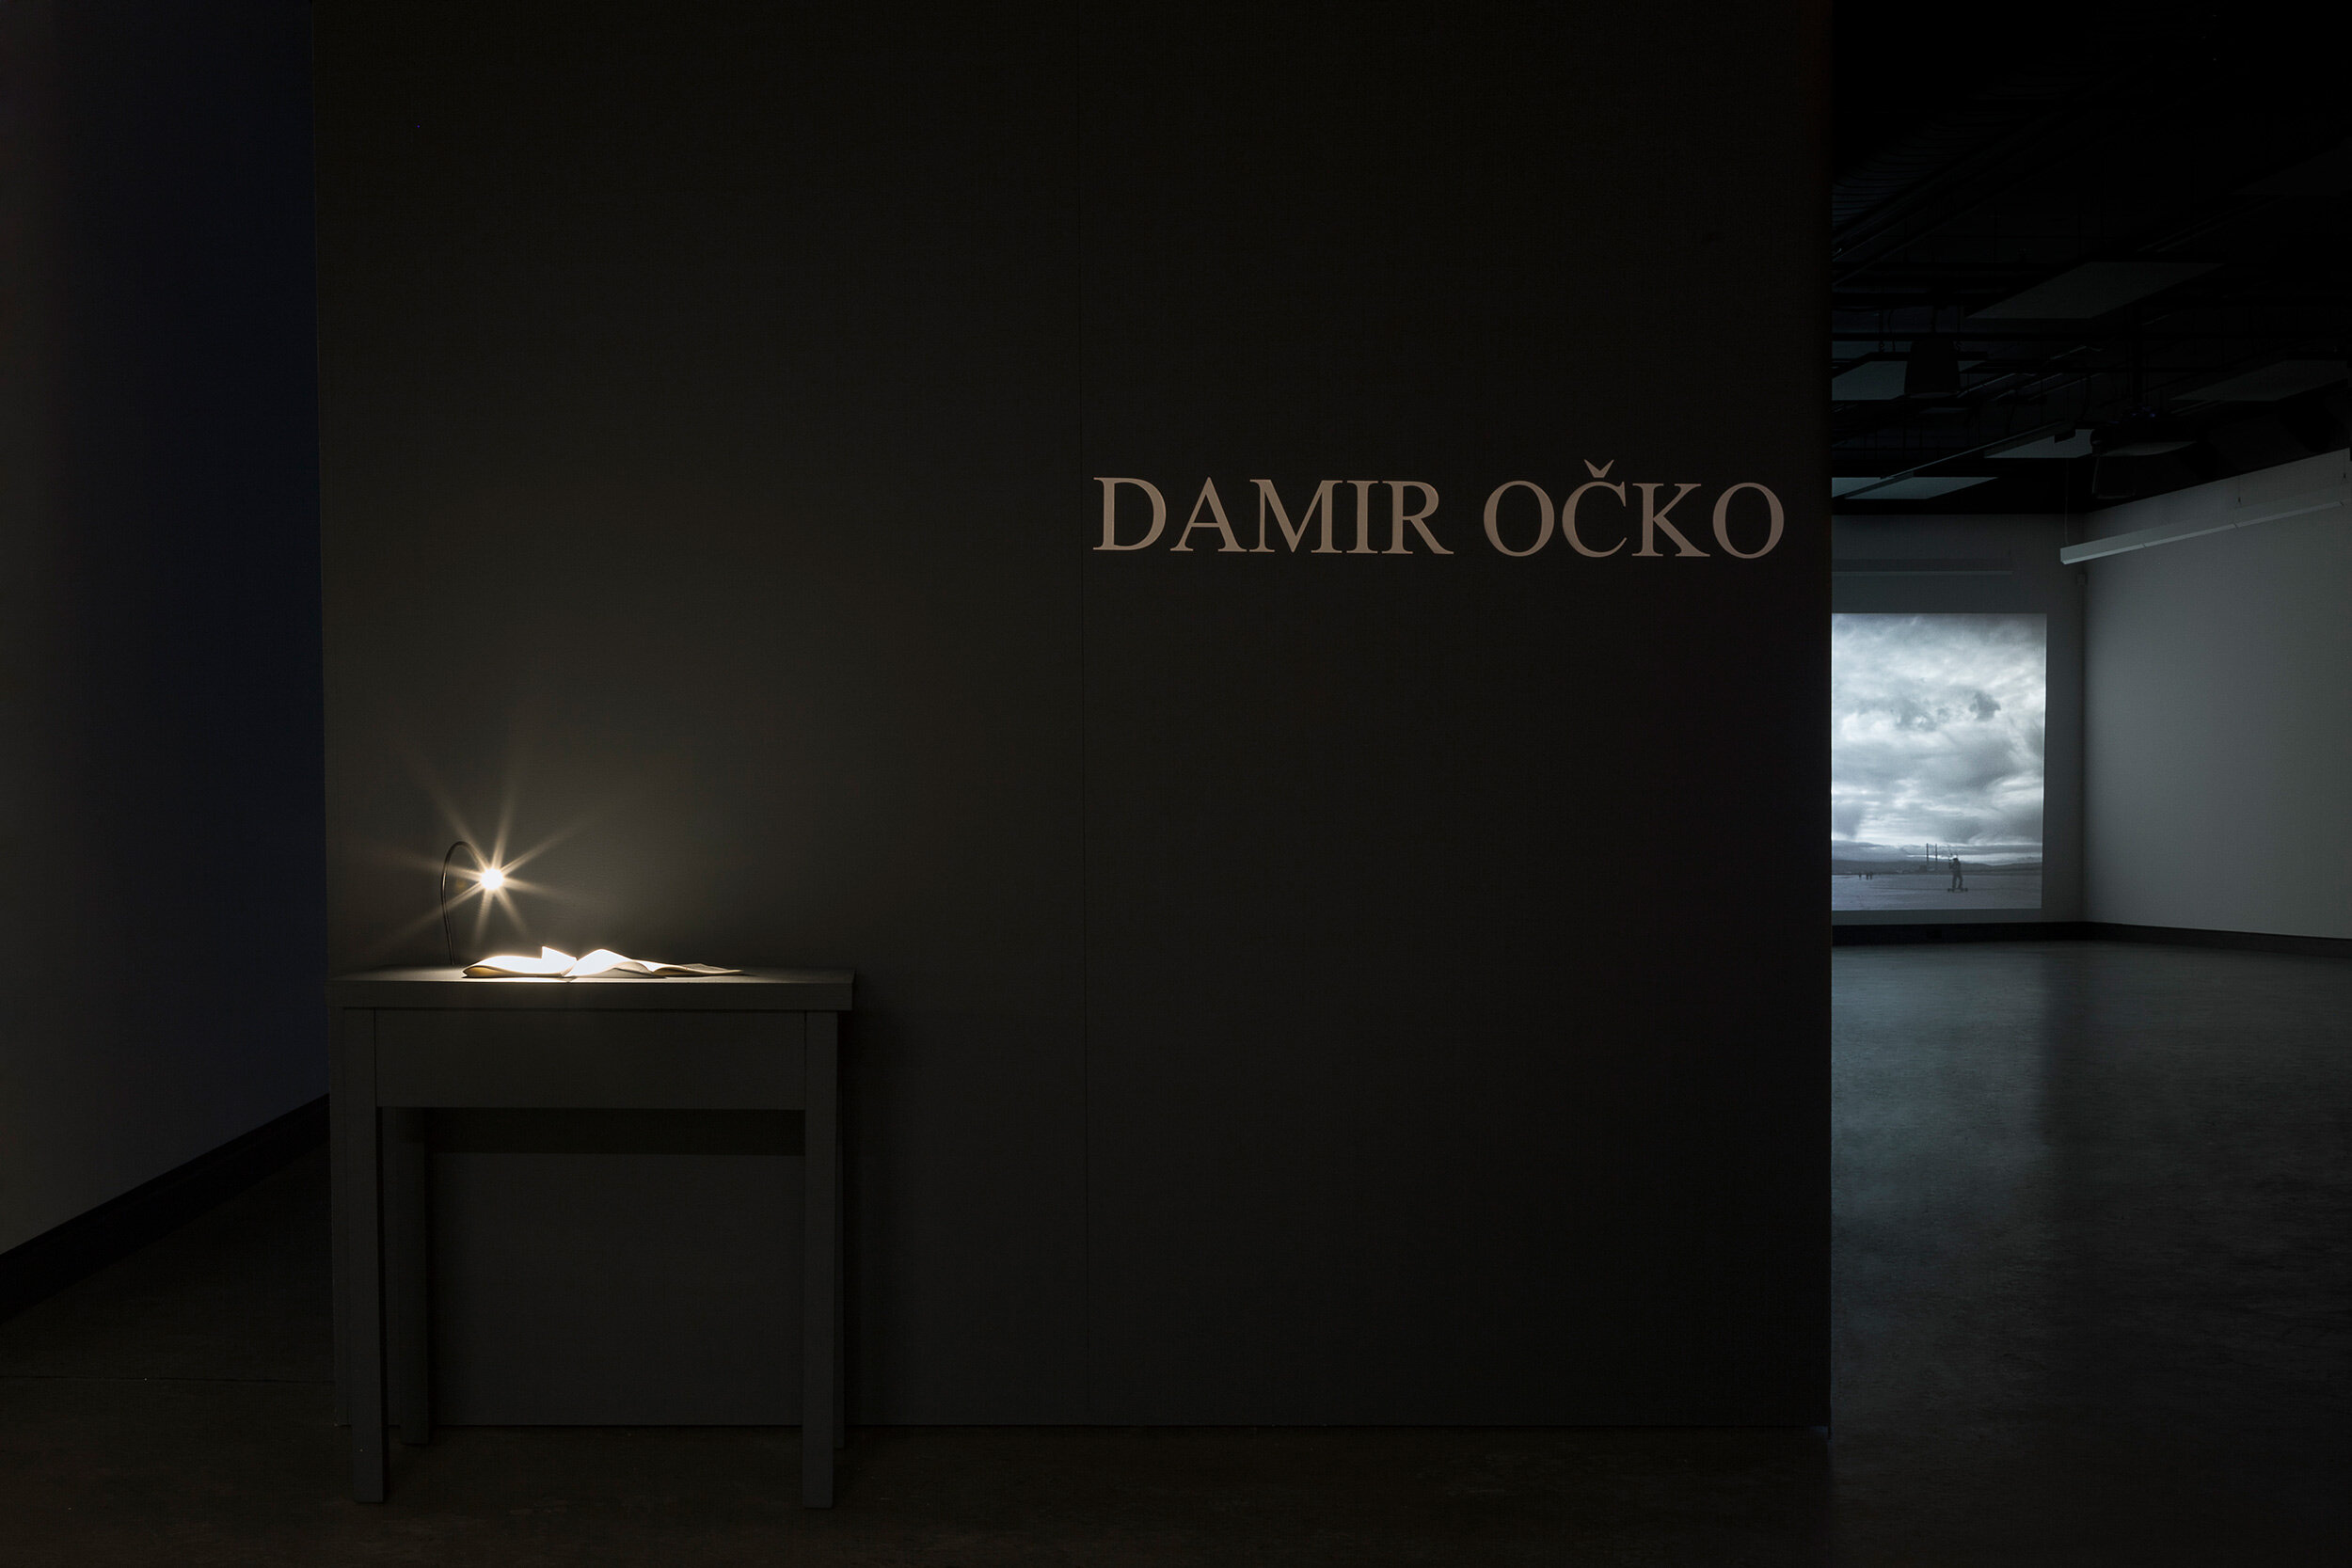  © Damir Očko, vue d’installation de l'exposition, Dazibao, 2016. Photo : Marilou Crispin. 